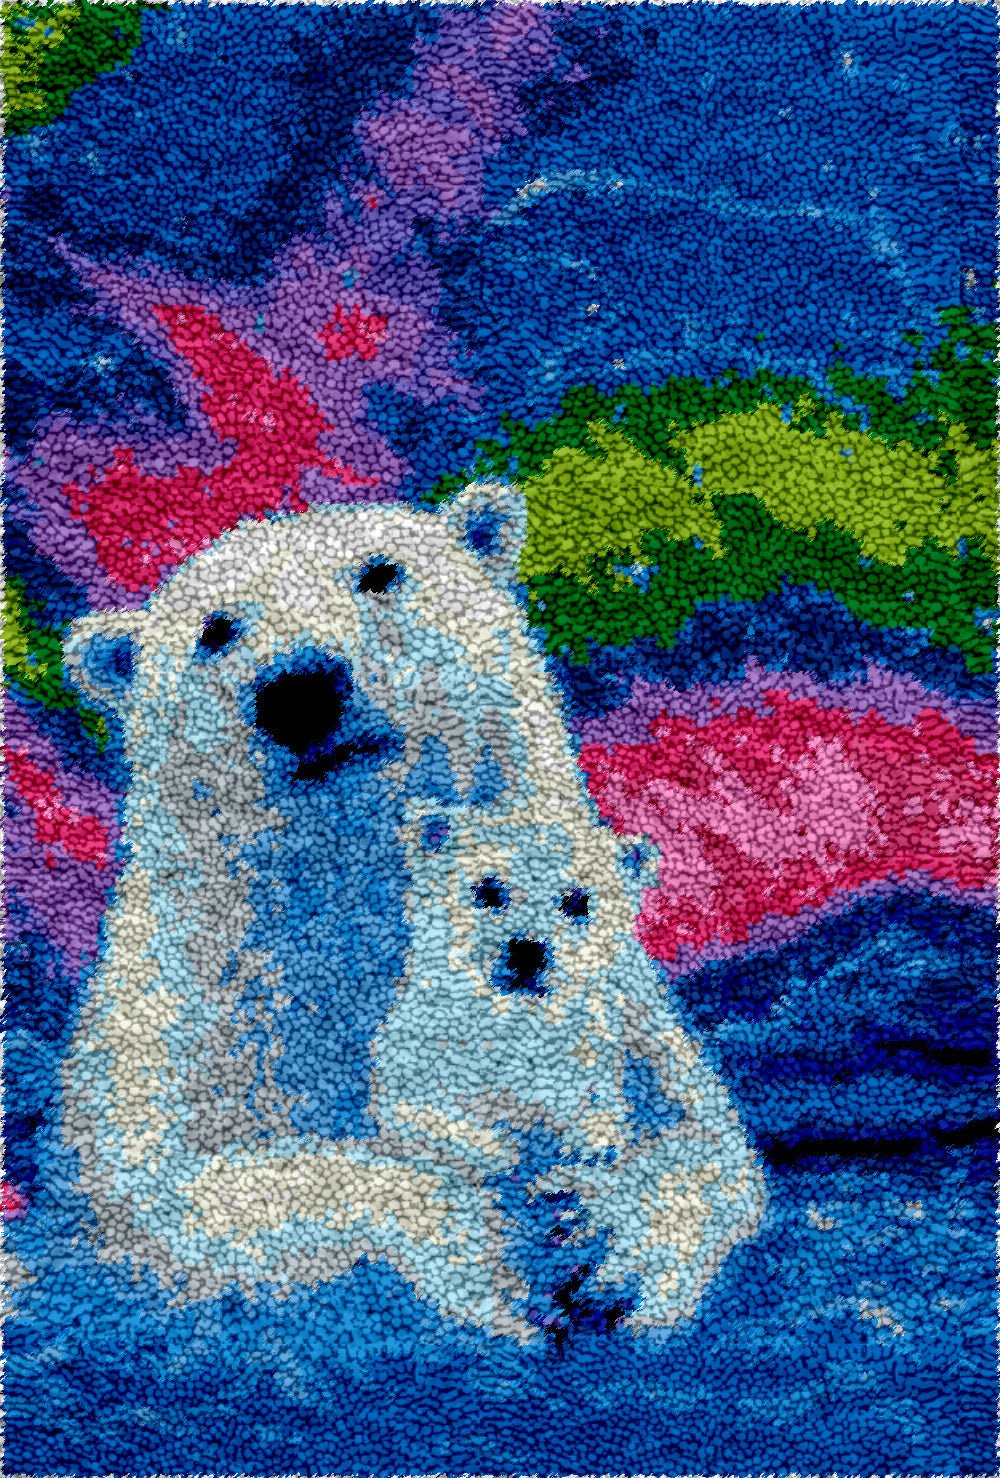 Polar Bears in the North - Latch Hook Rug Kit - Heartful Crafts | DIY Latch Hook